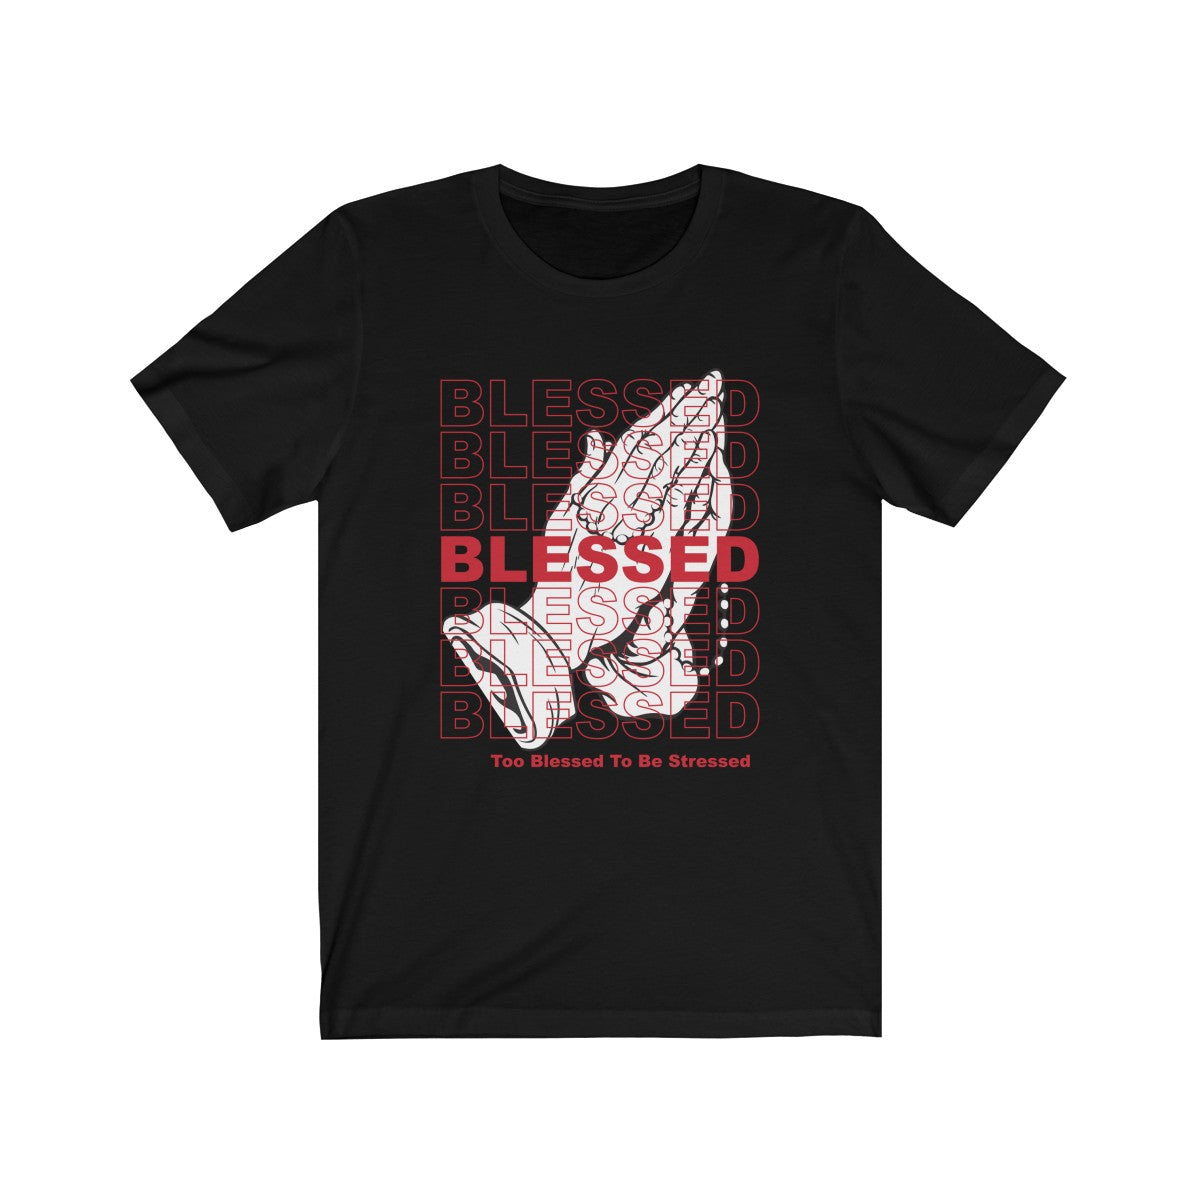 'Too Blessed' Short Sleeve Tee